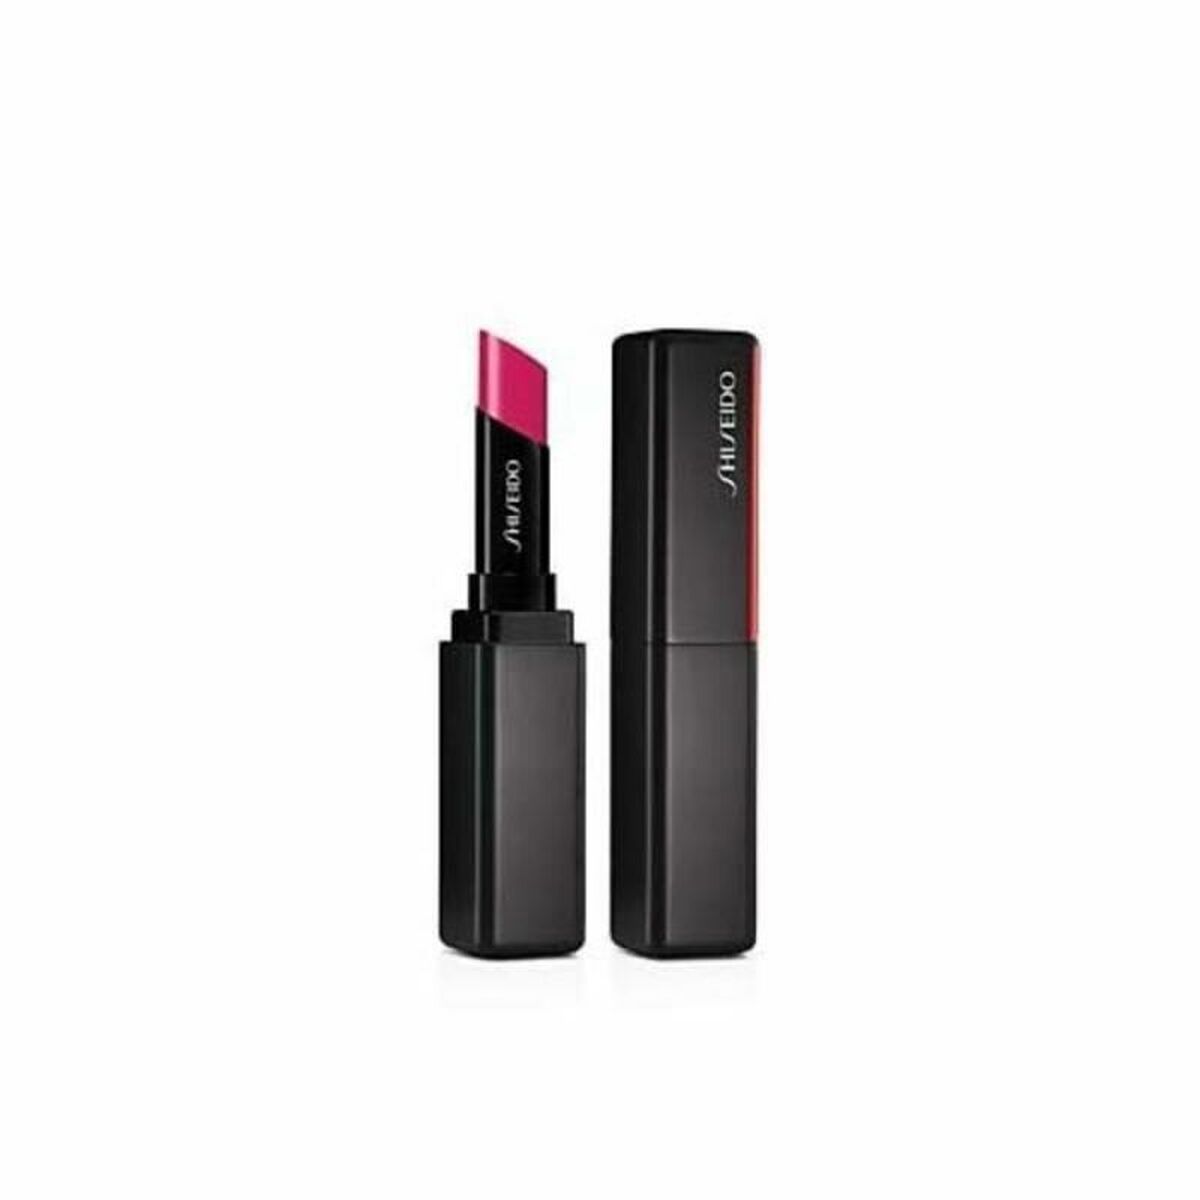 Lipstick Color Gel Shiseido (2 g) - JOSEPH BEAUTY